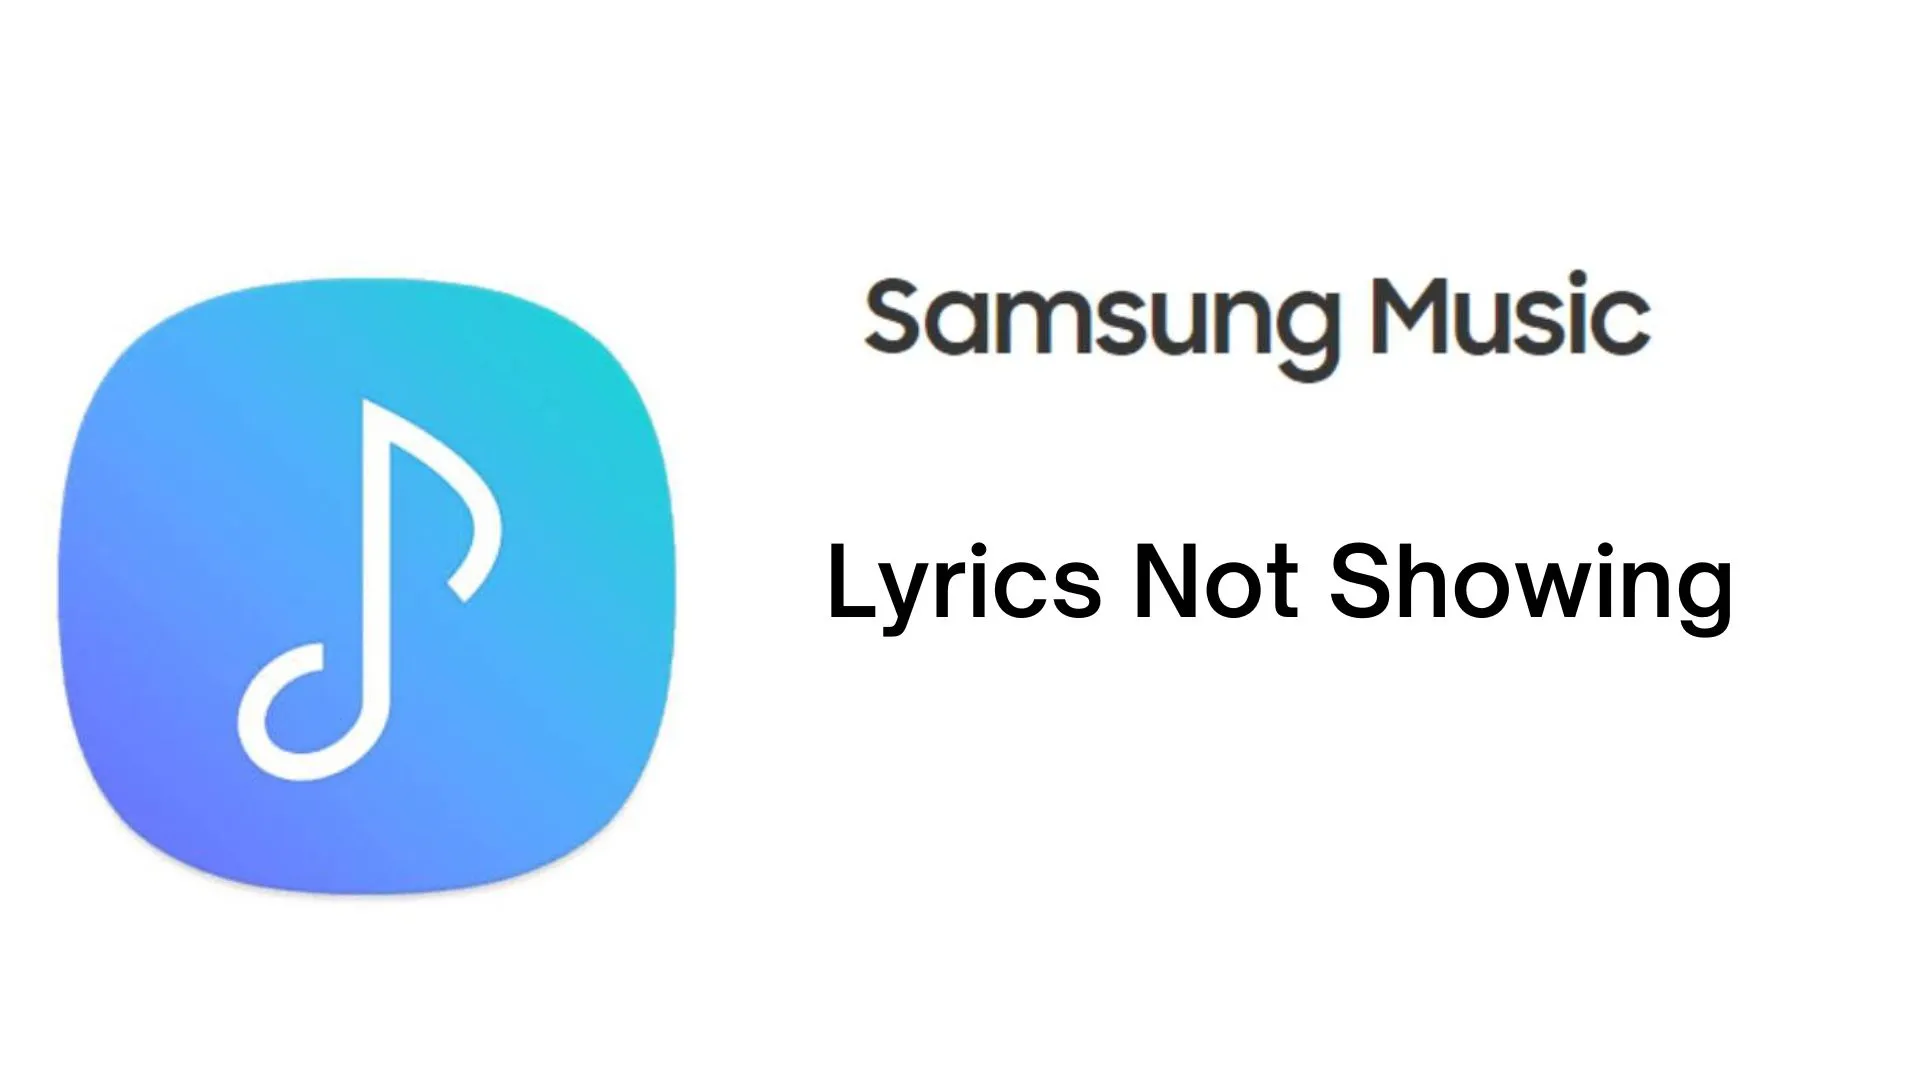 How to Fix Samsung Music Not Showing Lyrics?